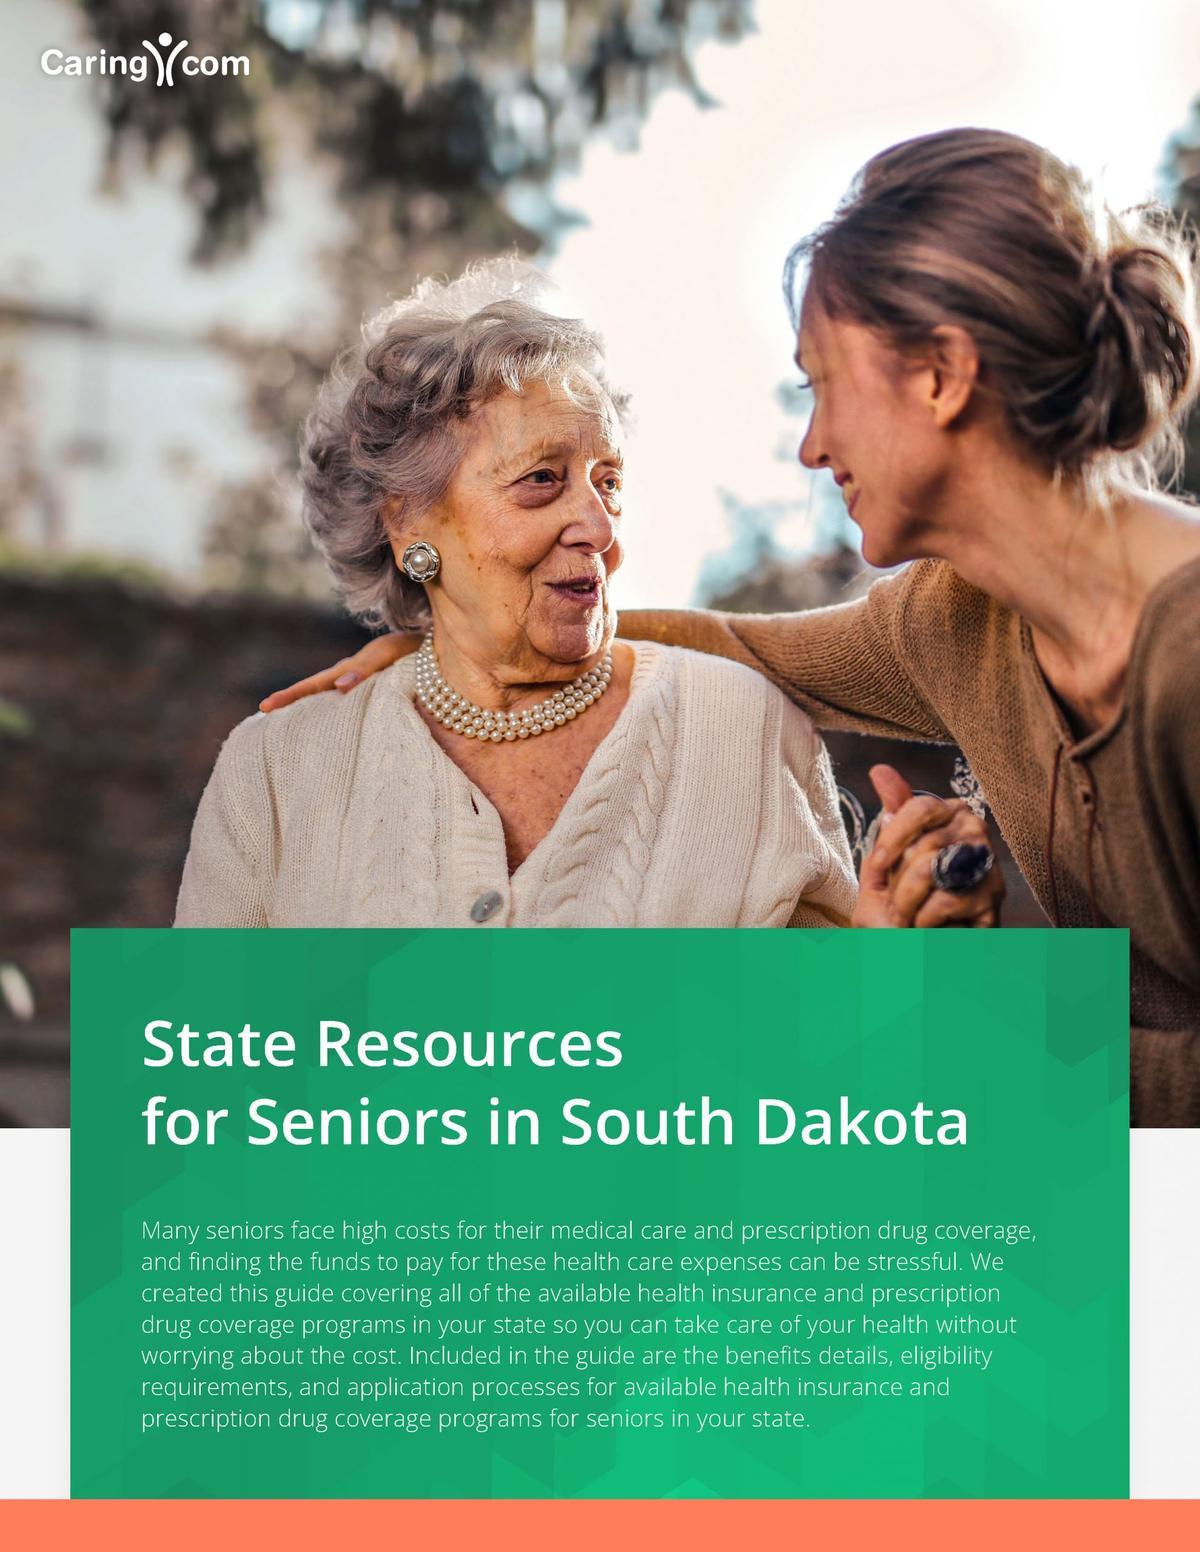 Financial Assistance for Prescriptions in South Dakota